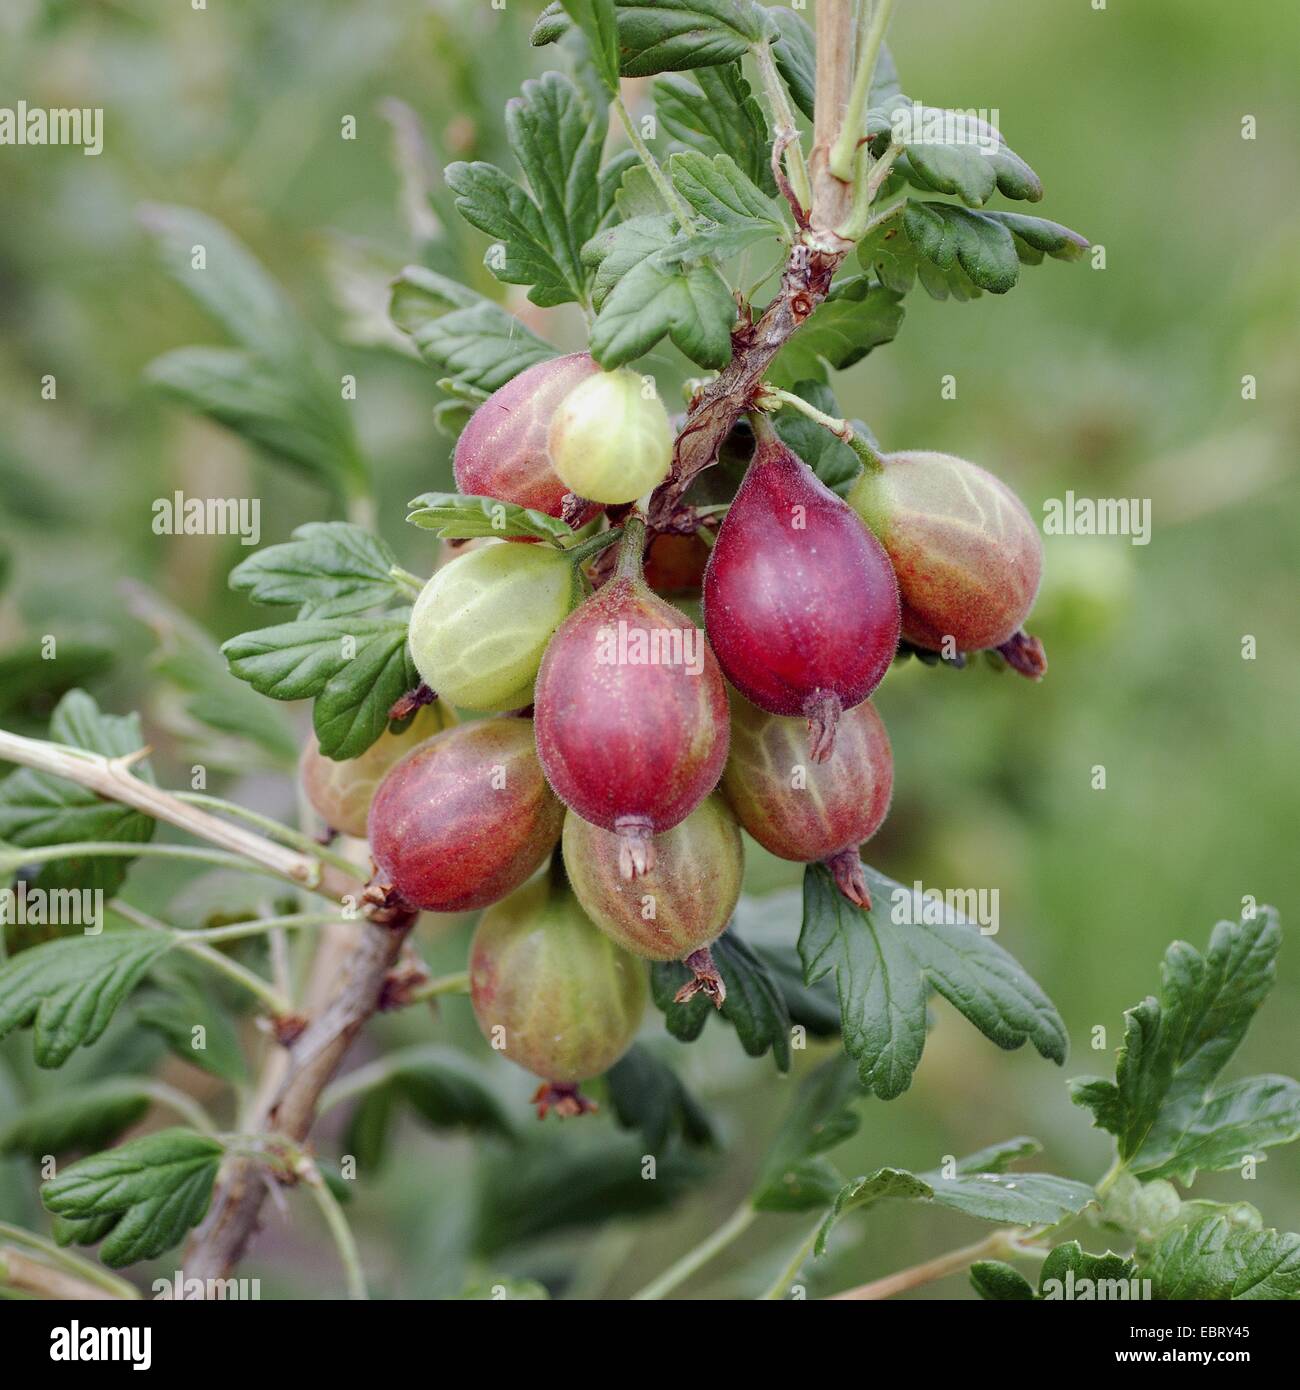 wild gooseberry, European gooseberry (Ribes uva-crispa 'Rolonda', Ribes uva-crispa Rolonda), red gooseberry, cultivar Rolonda Stock Photo